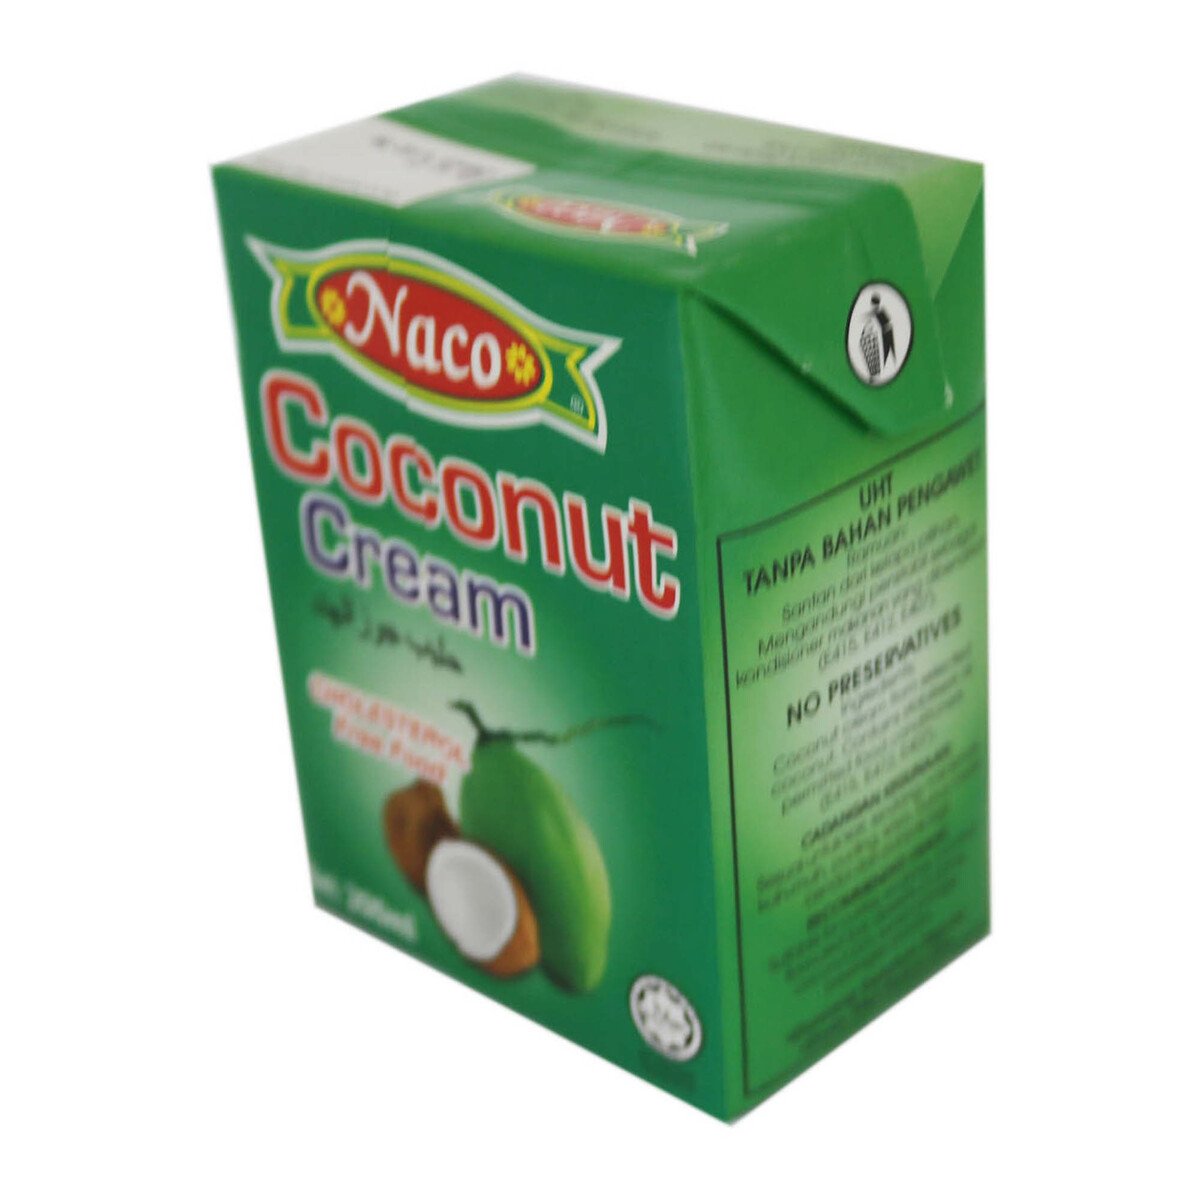 Naco Coconut Cream 200ml